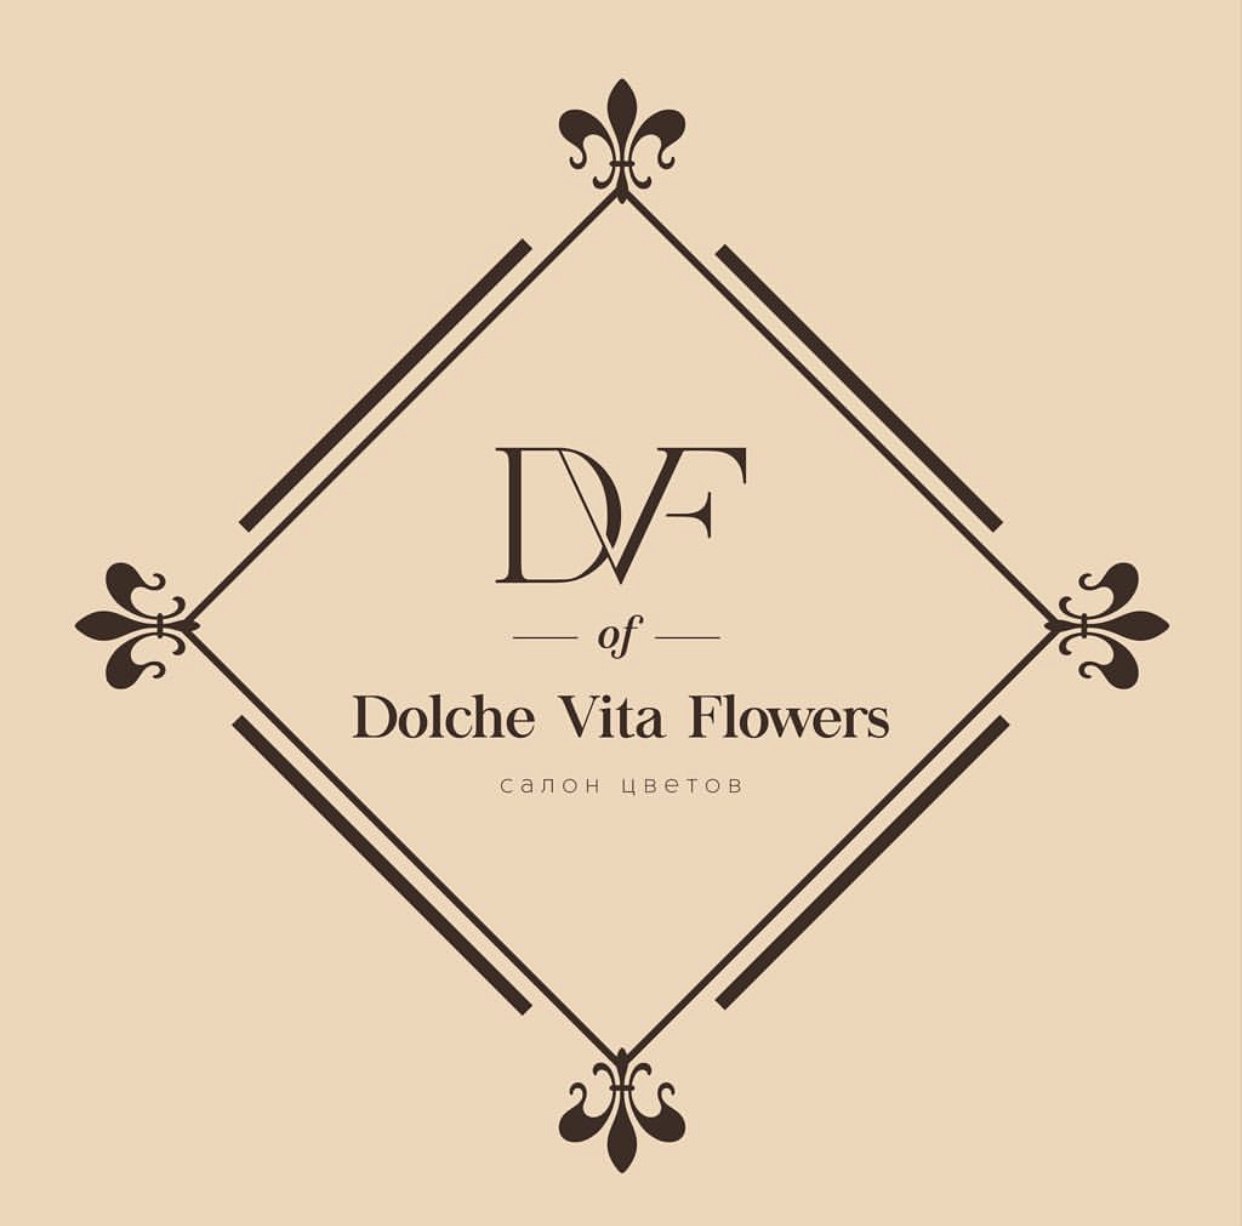 Floral фирма. Dolce Vita цветы Липецк. Stile di Vita Липецк logo. Dolce vita липецк